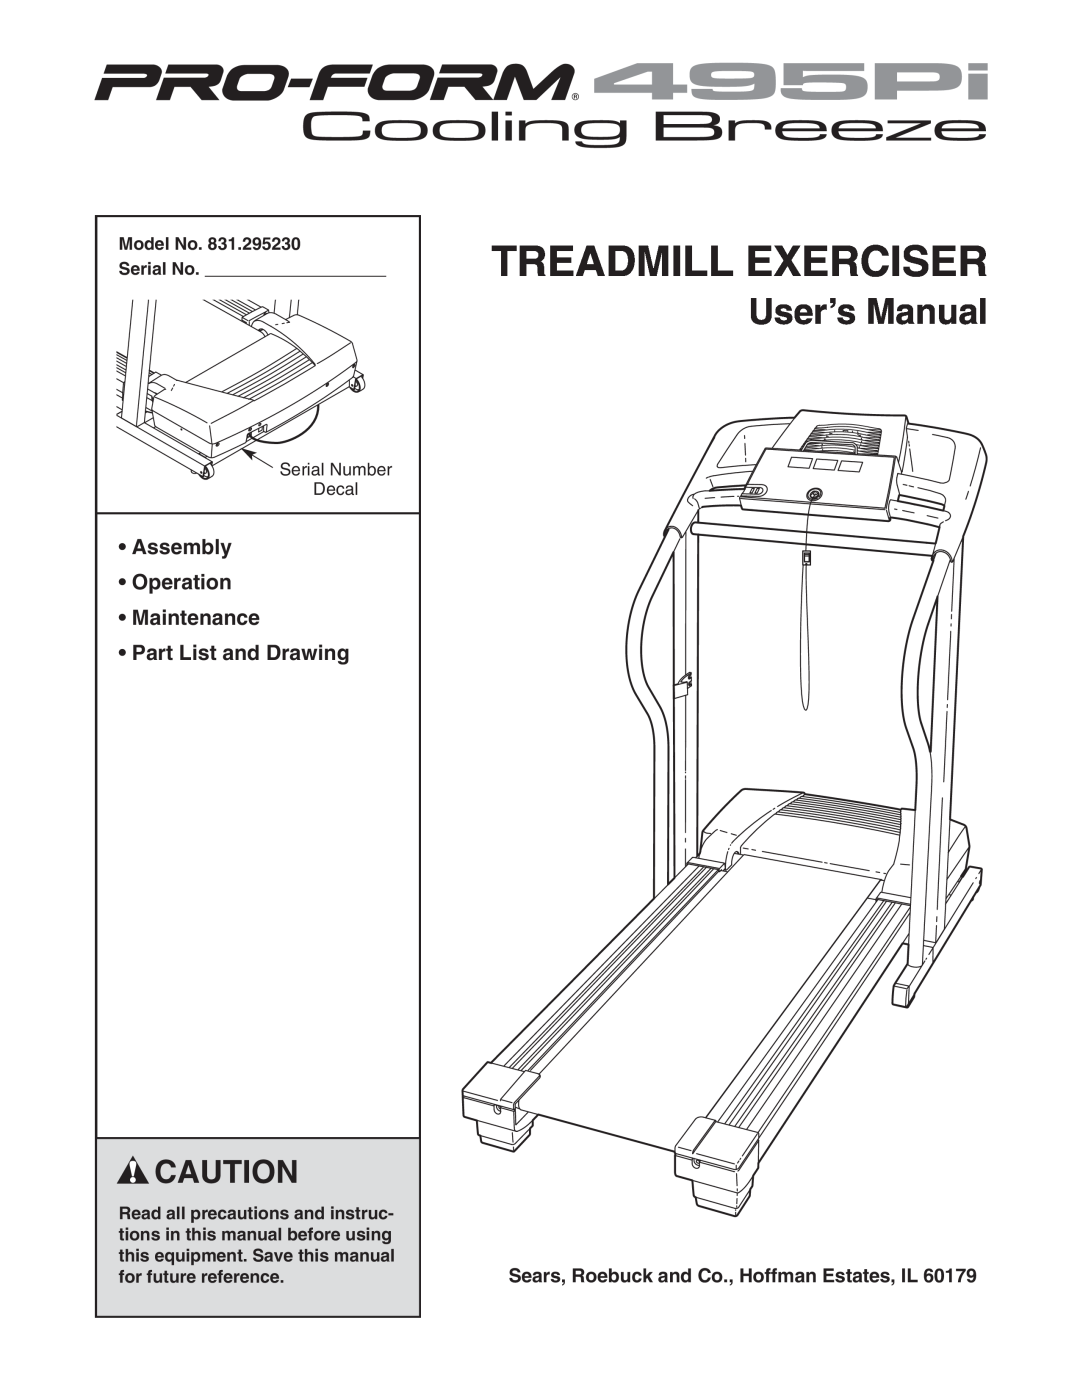 ProForm 831.295230 user manual Model No Serial No, Treadmill Exerciser, User’s Manual 